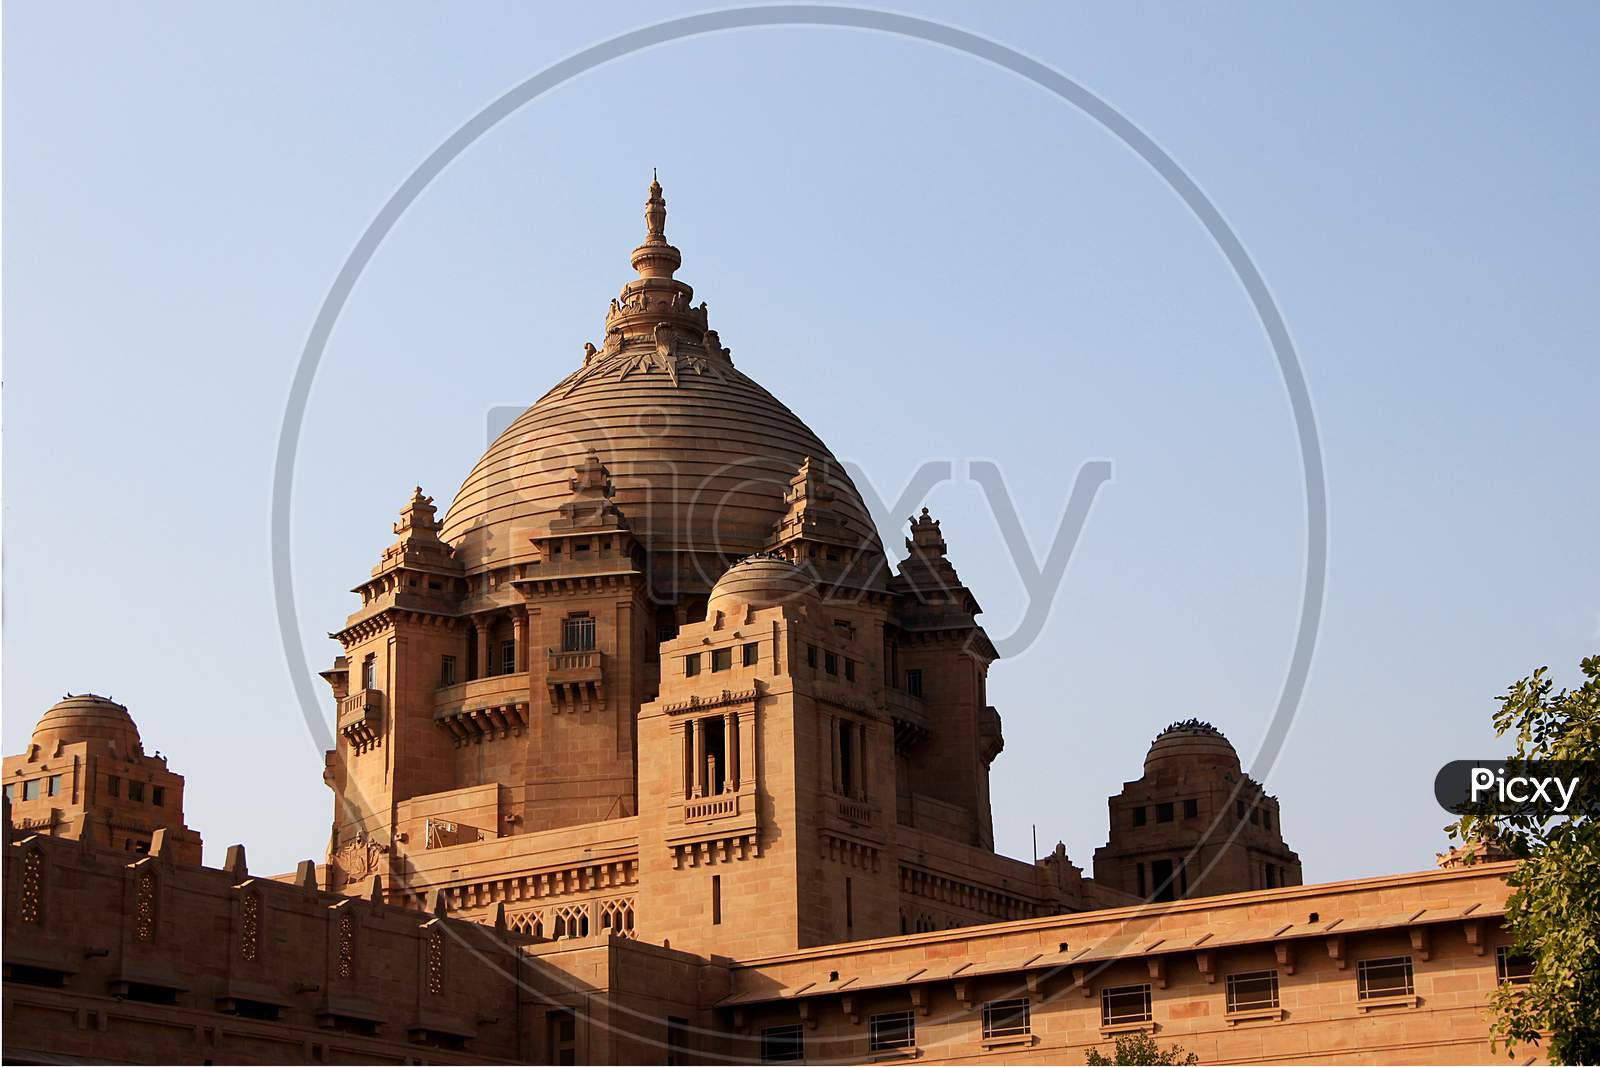 Central Dome Of Umaid Bhavan